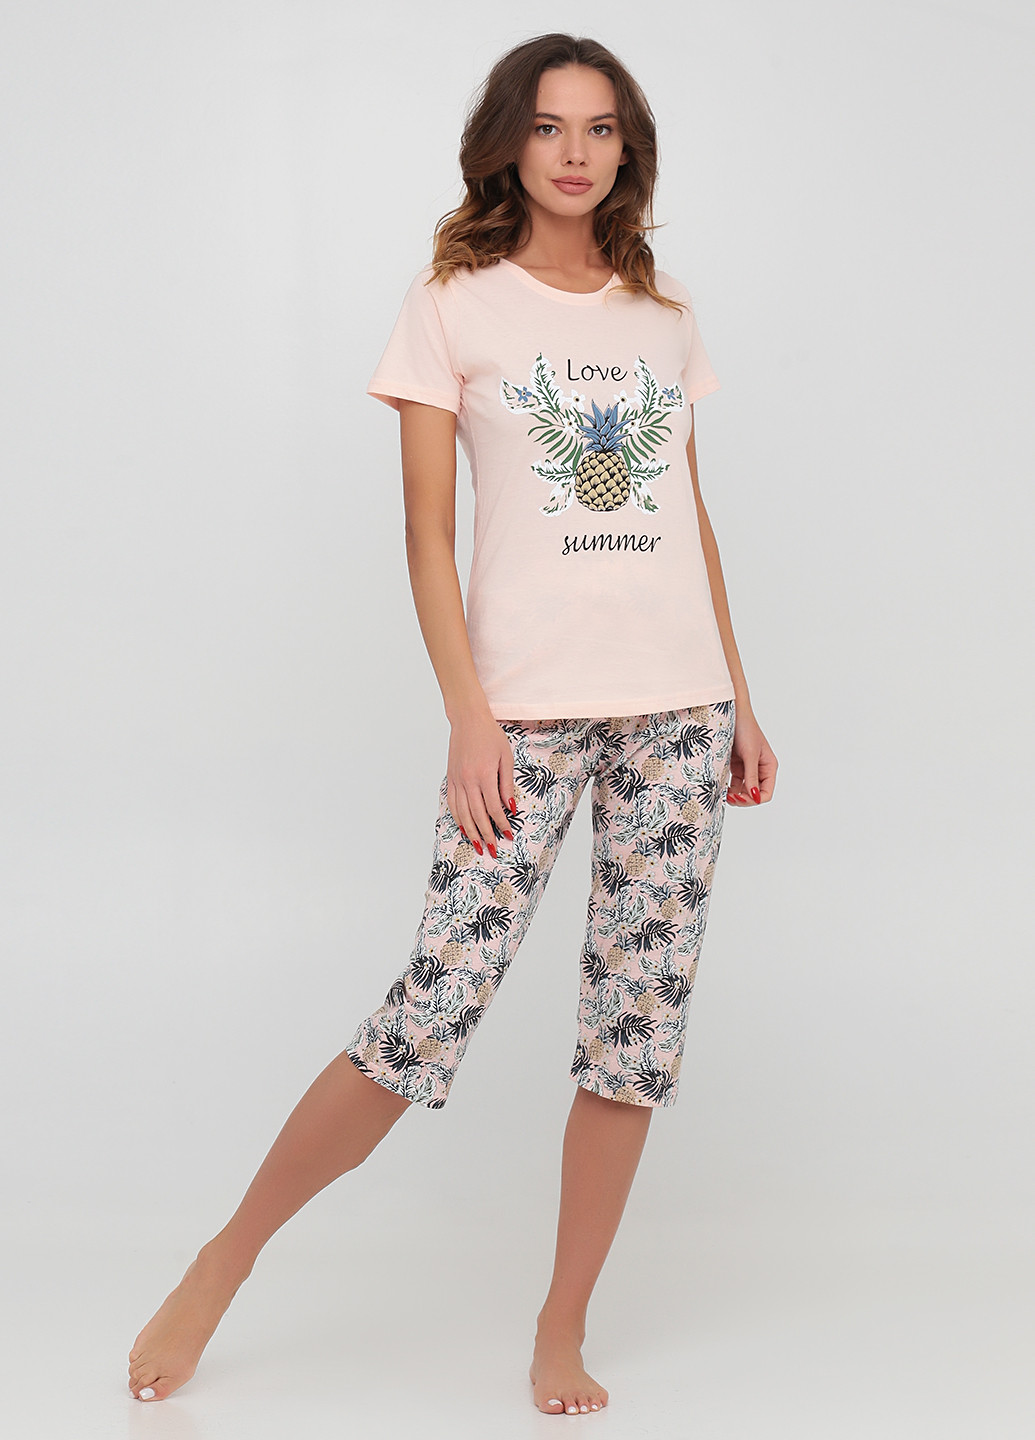 Персиковая всесезон пижама (футболка, бриджи) футболка + бриджи Boyraz